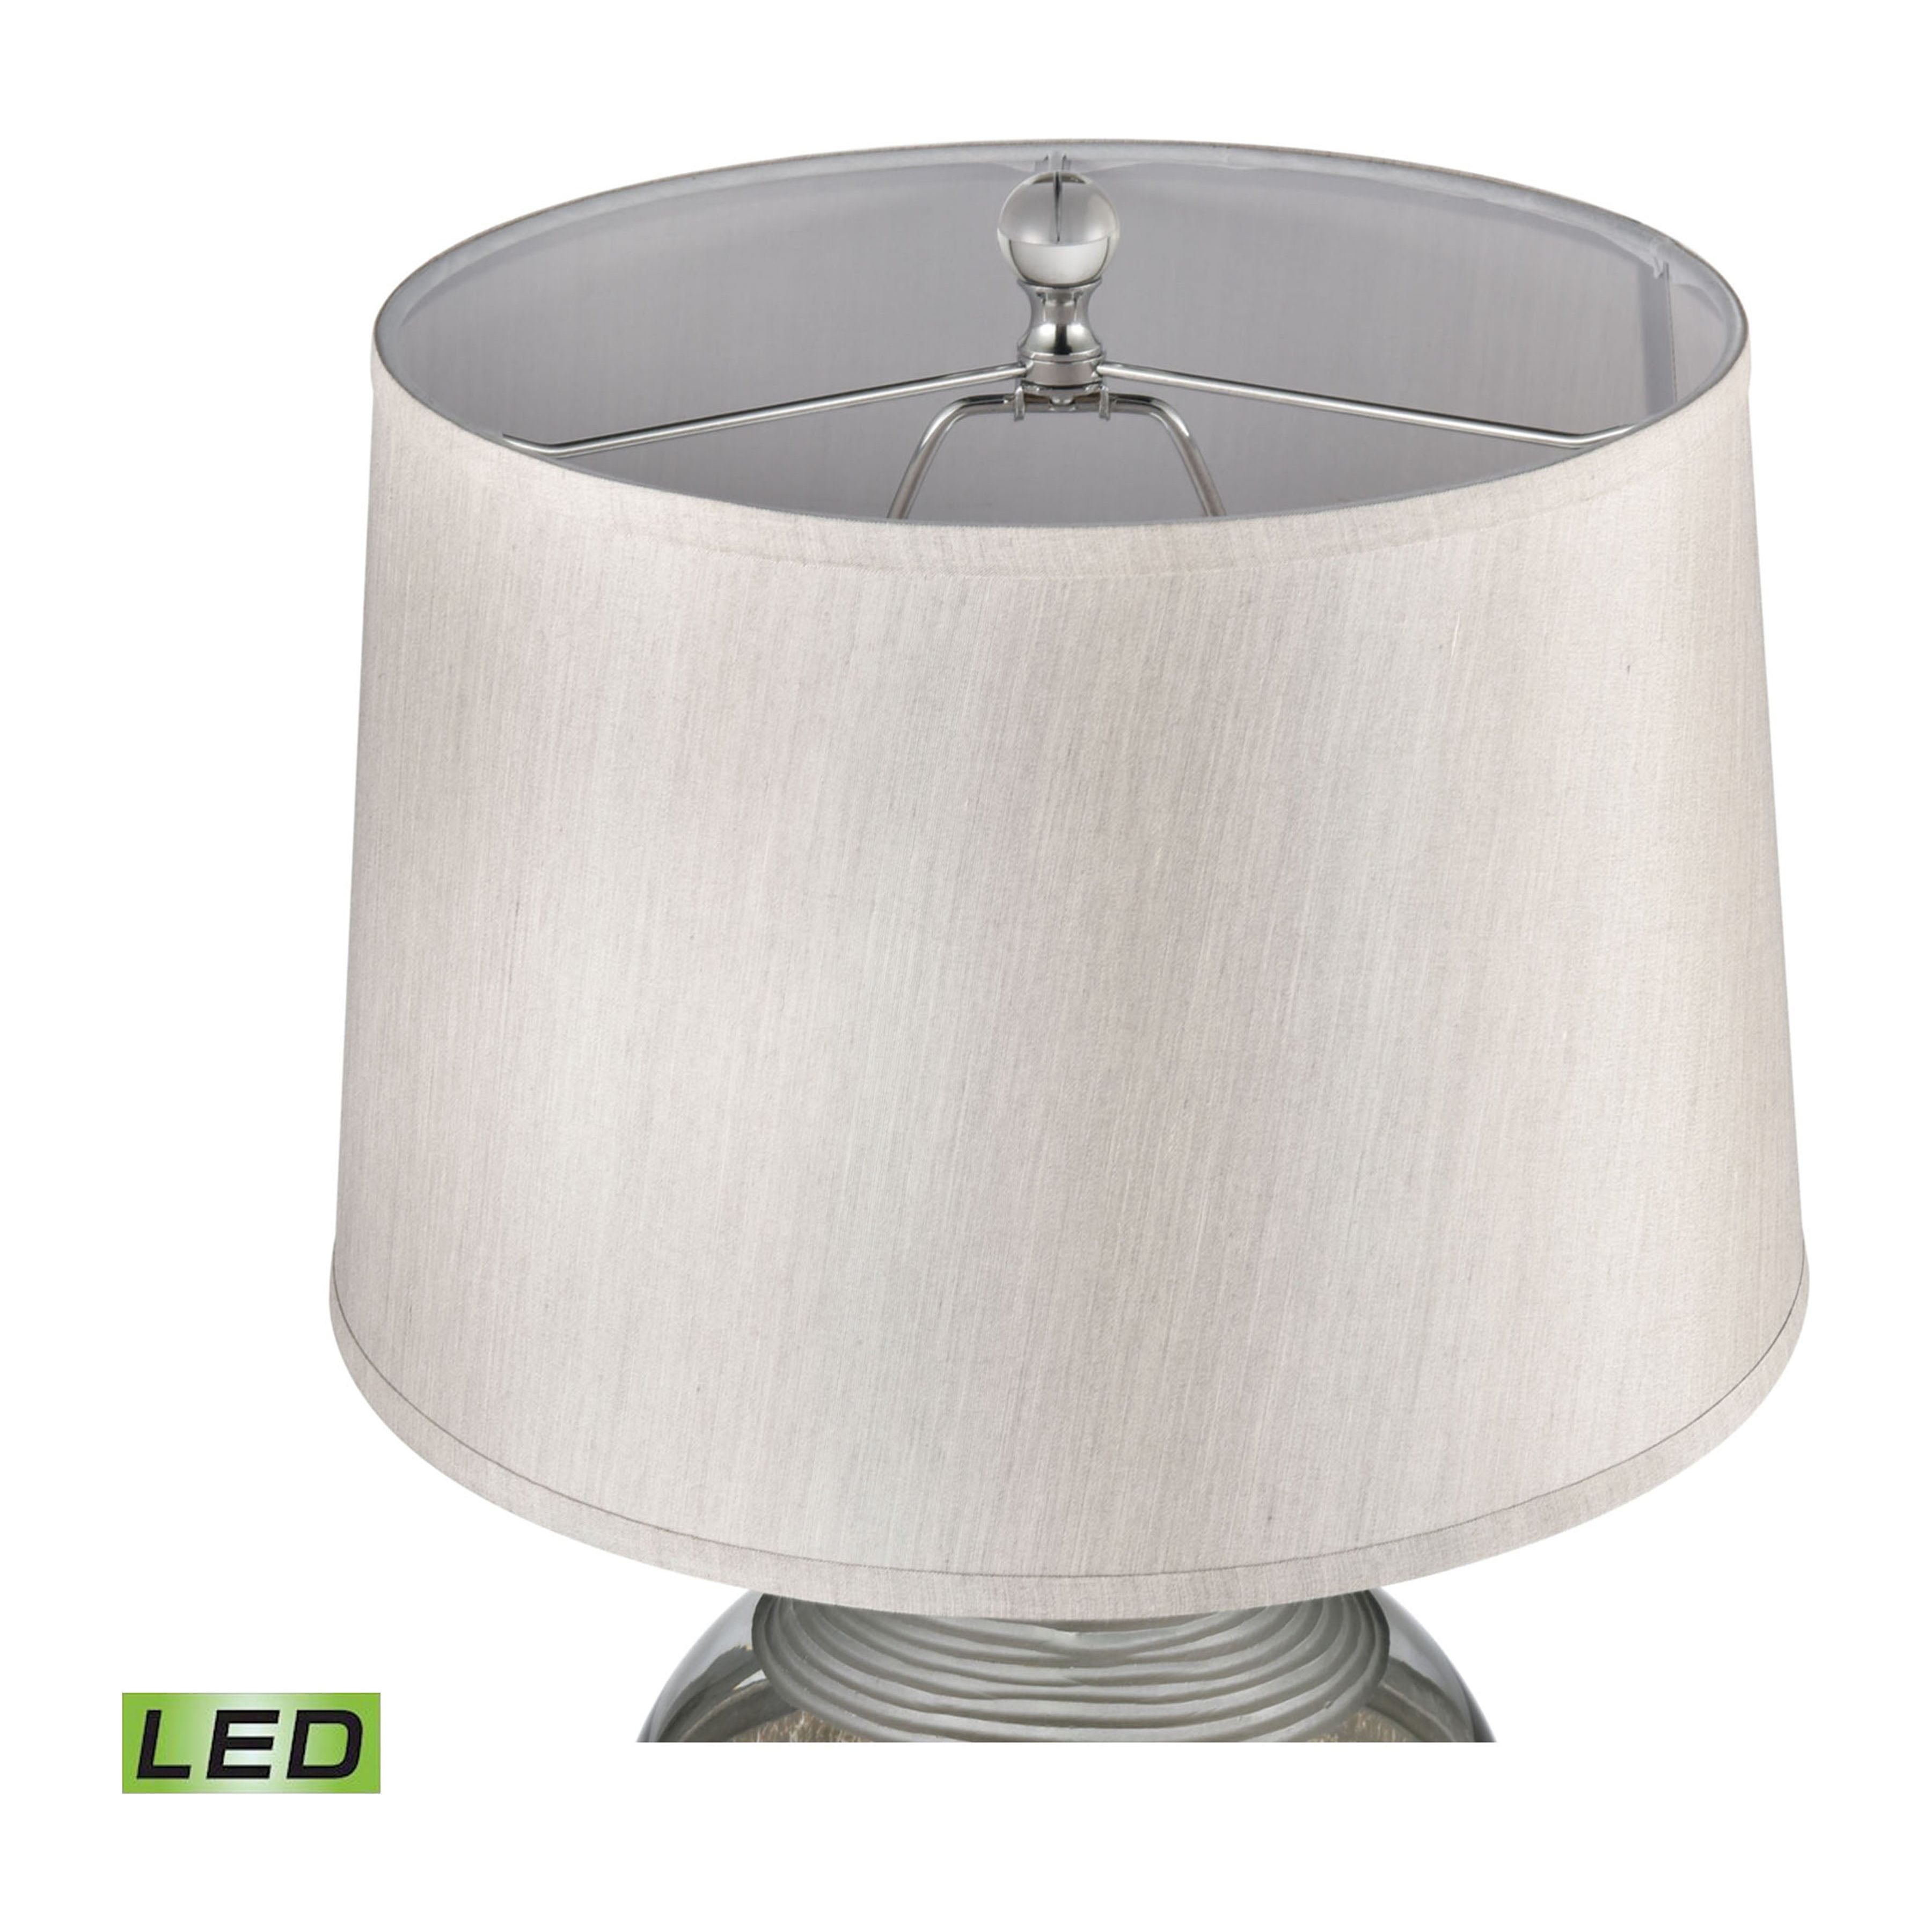 Vetranio 24" High 1-Light Table Lamp